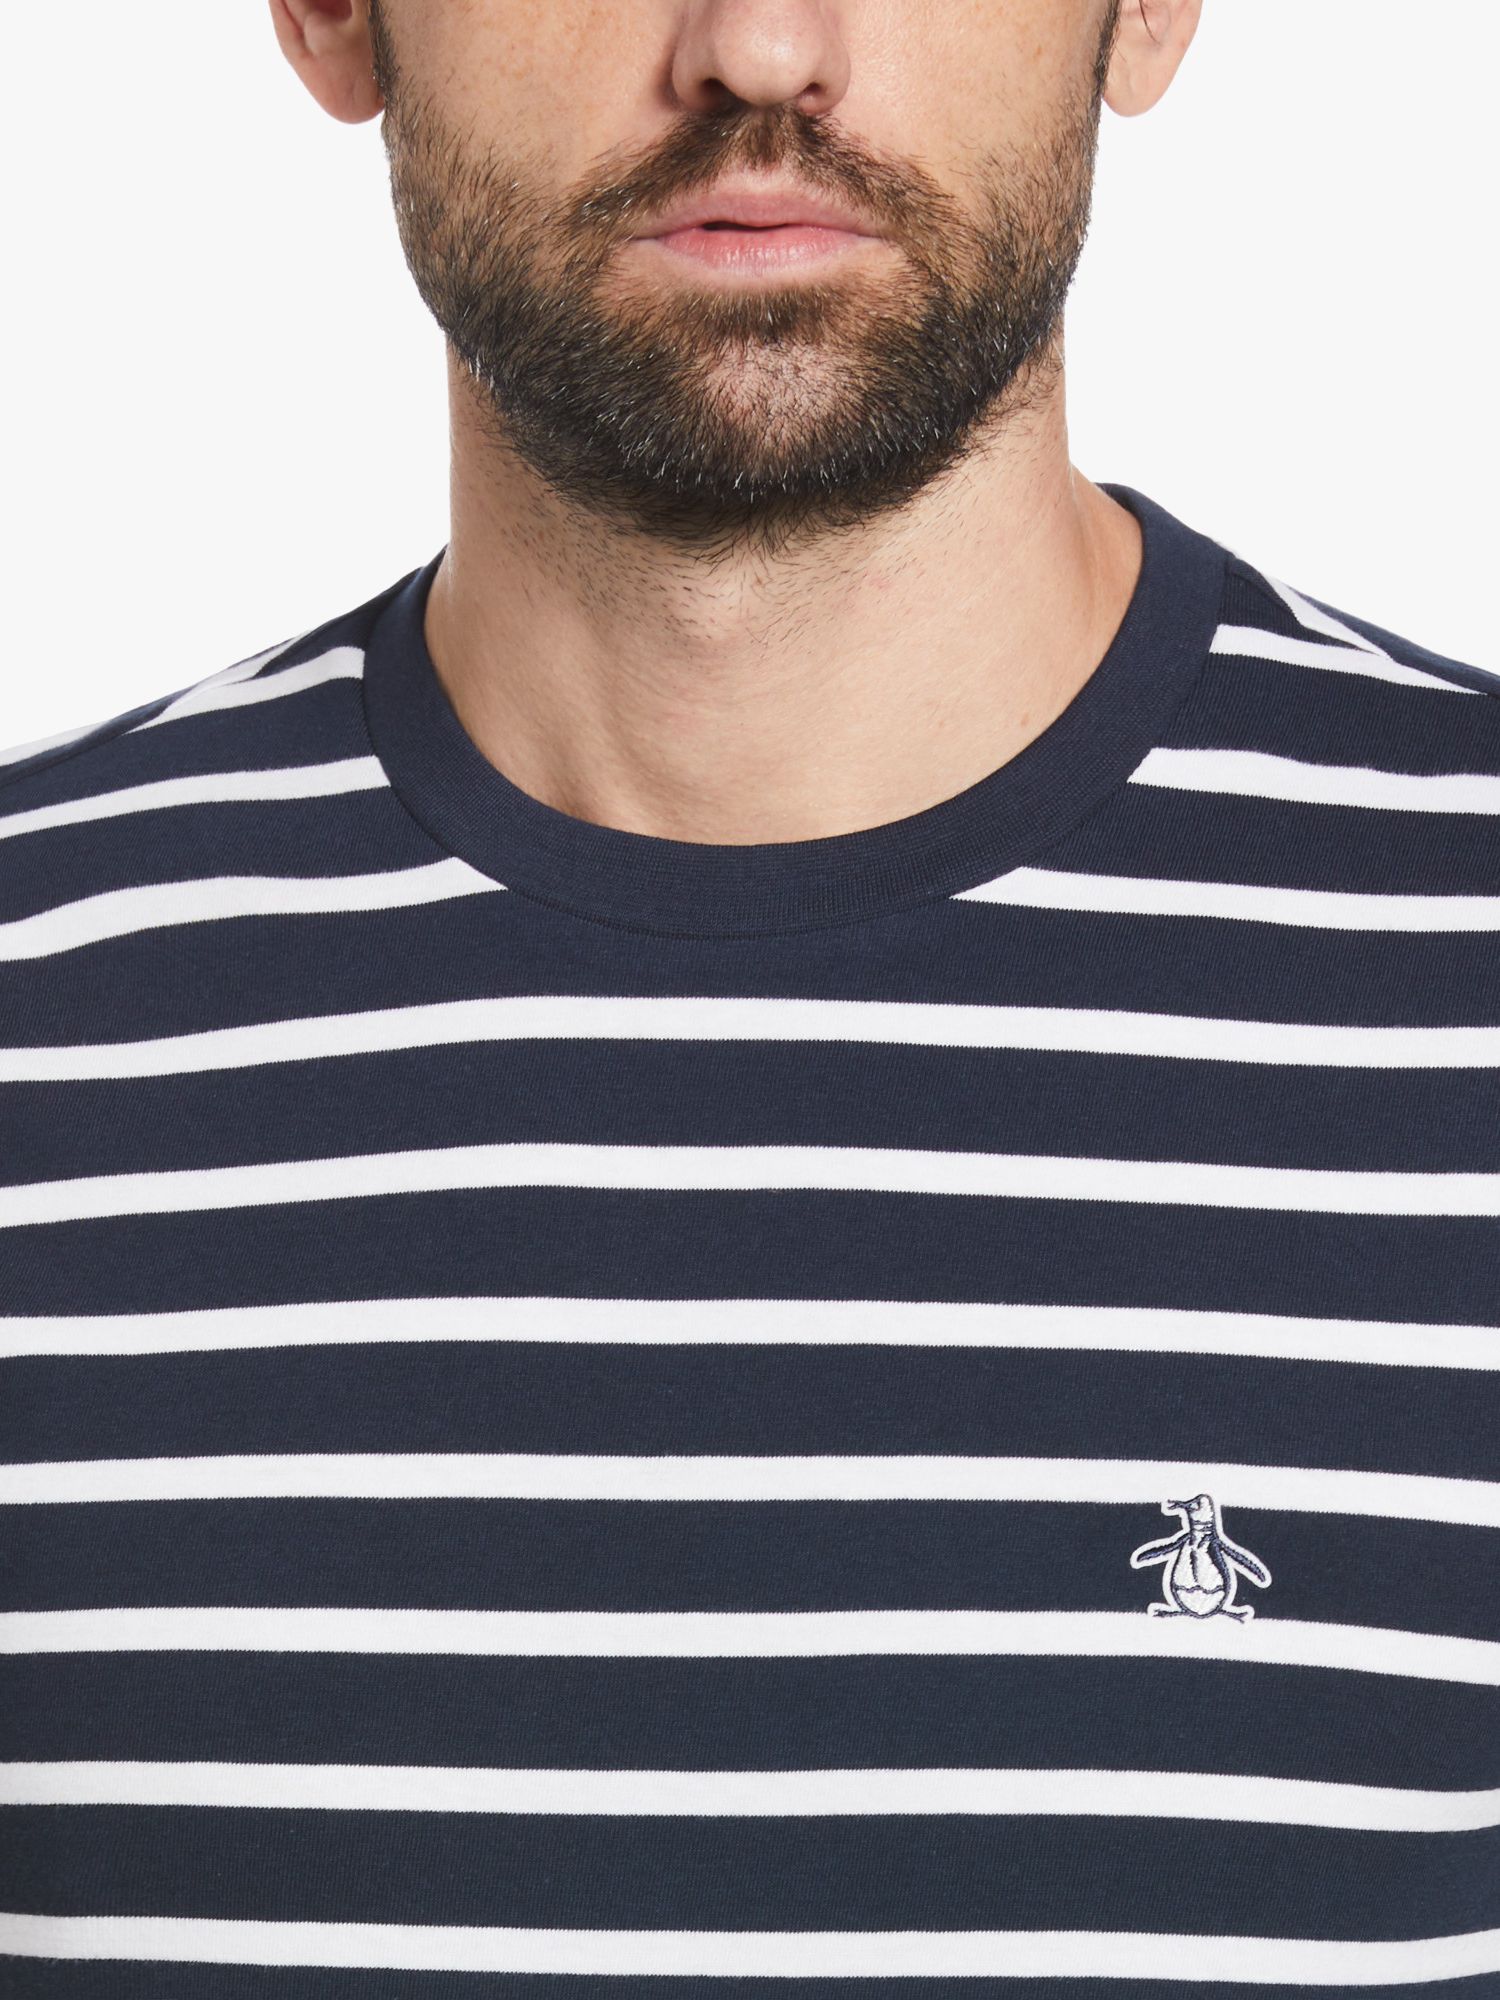 Original Penguin Breton Stripe Short Sleeve T-Shirt, Blue/White, L